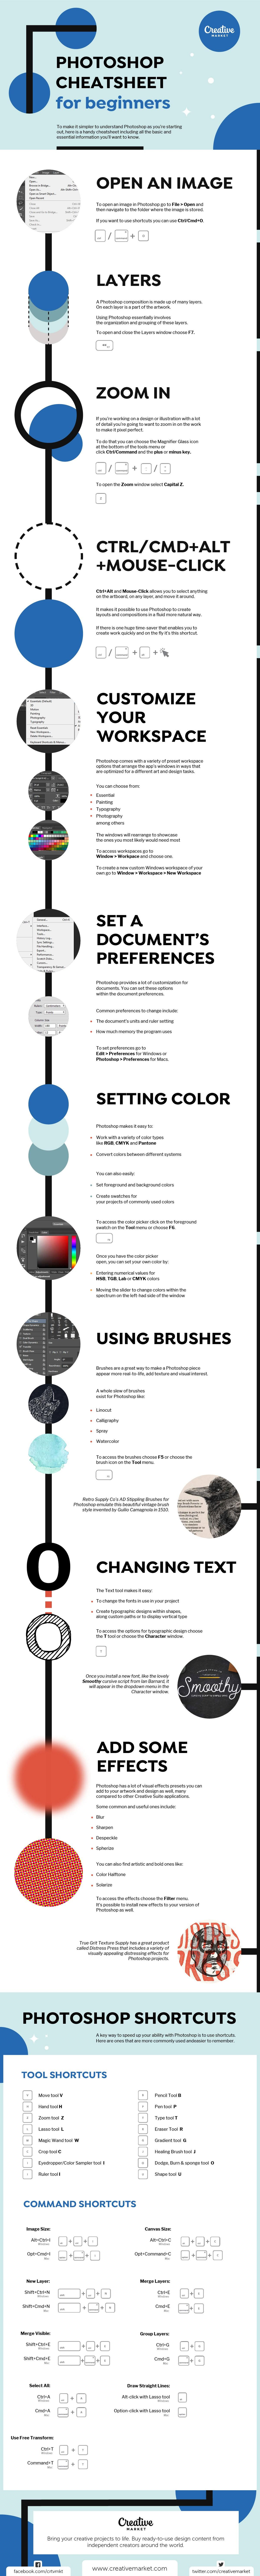 Photoshop Cheatsheet for Beginners #Infographic